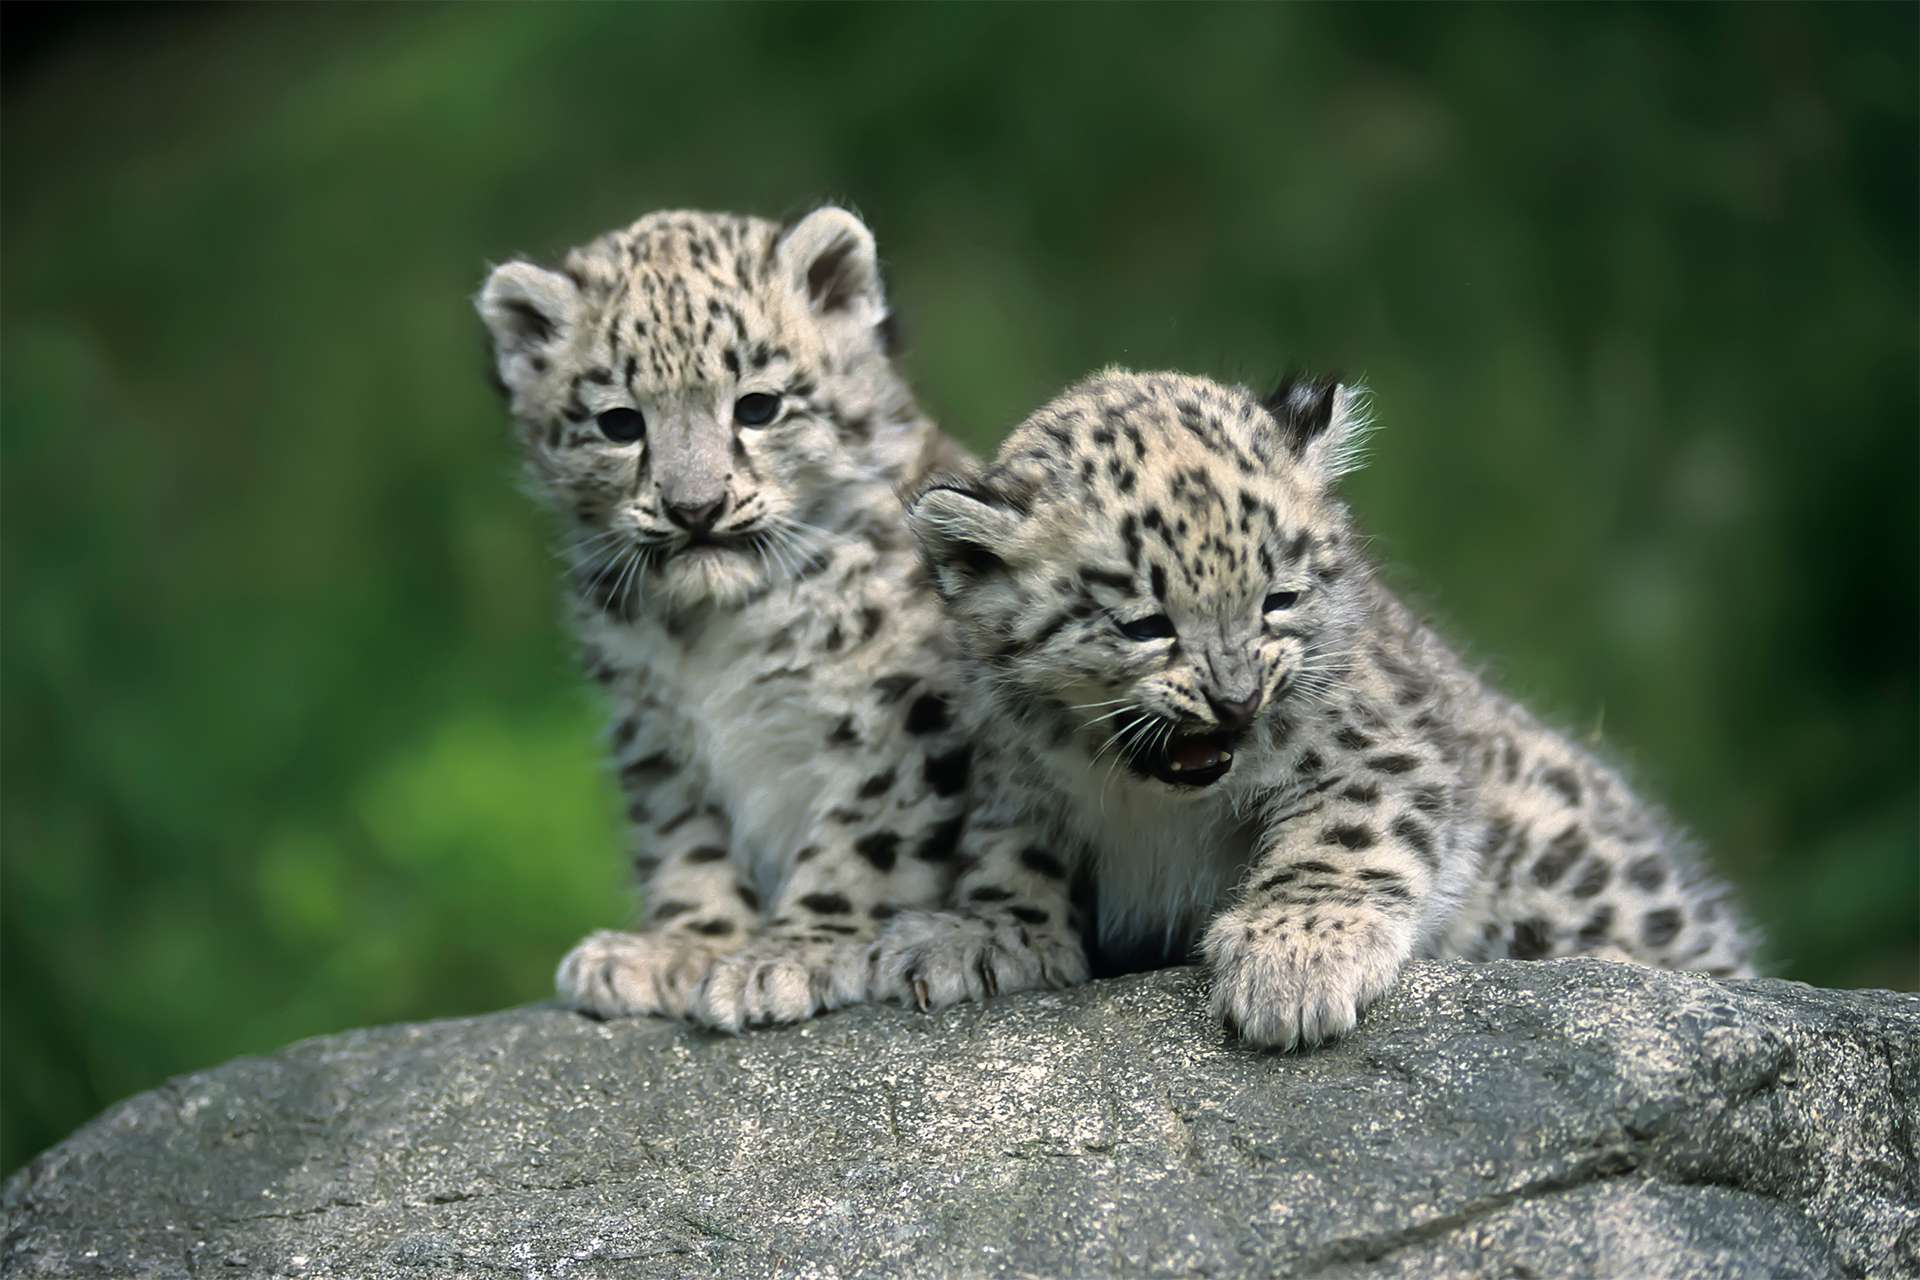 A pair of adorable snow leopard cubs